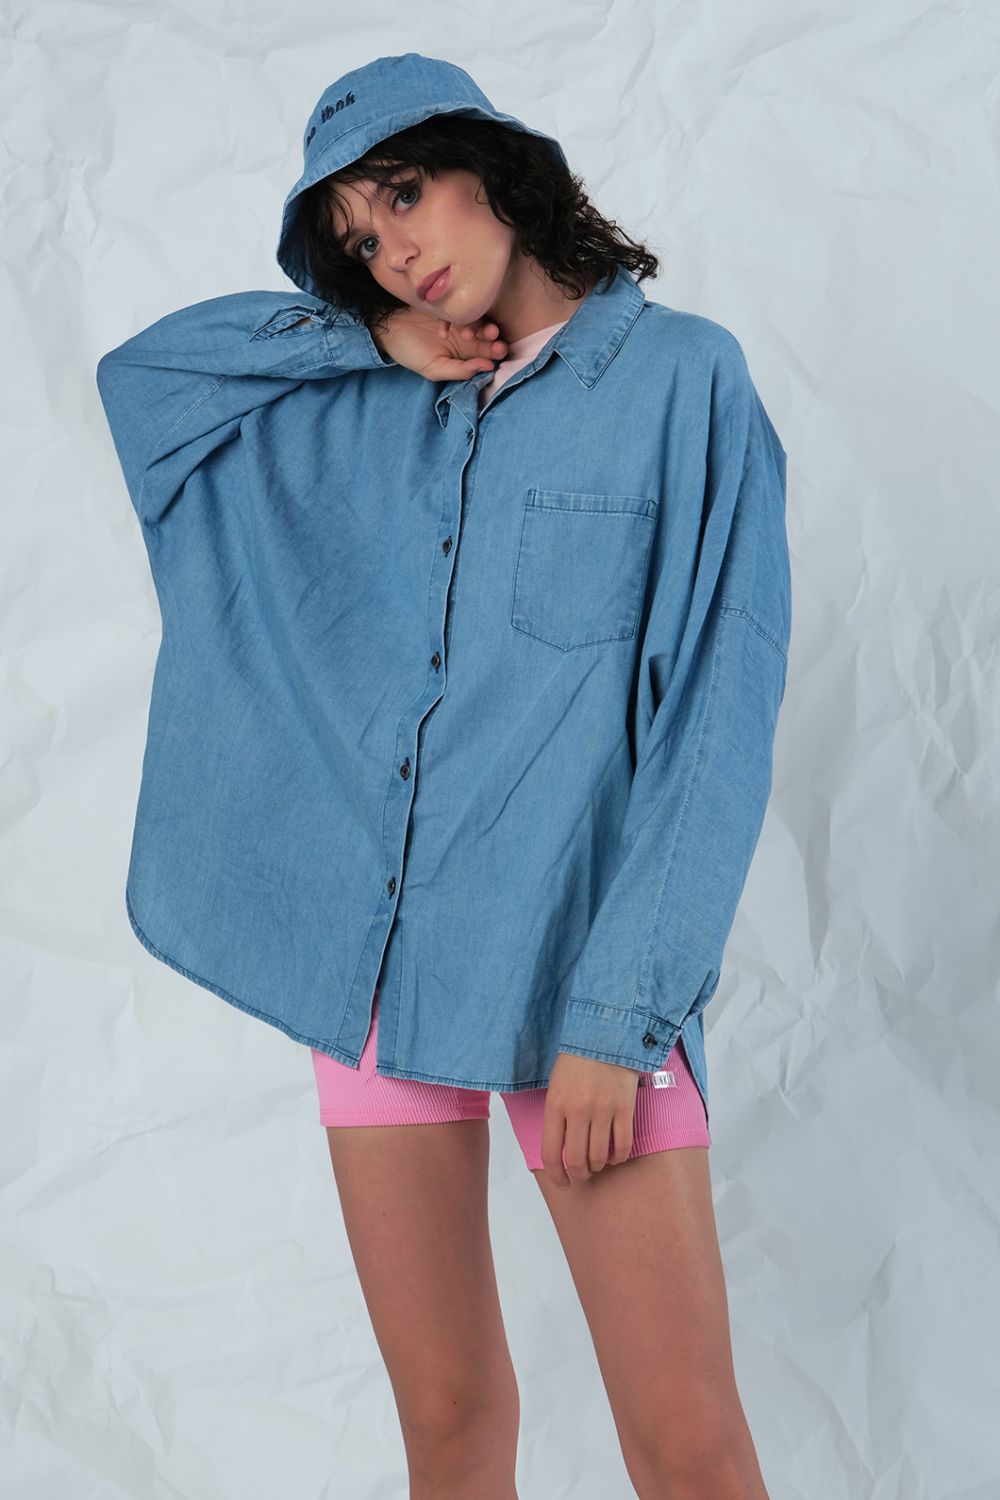 Denim Shirt Billie Eilish Oversized Blue 